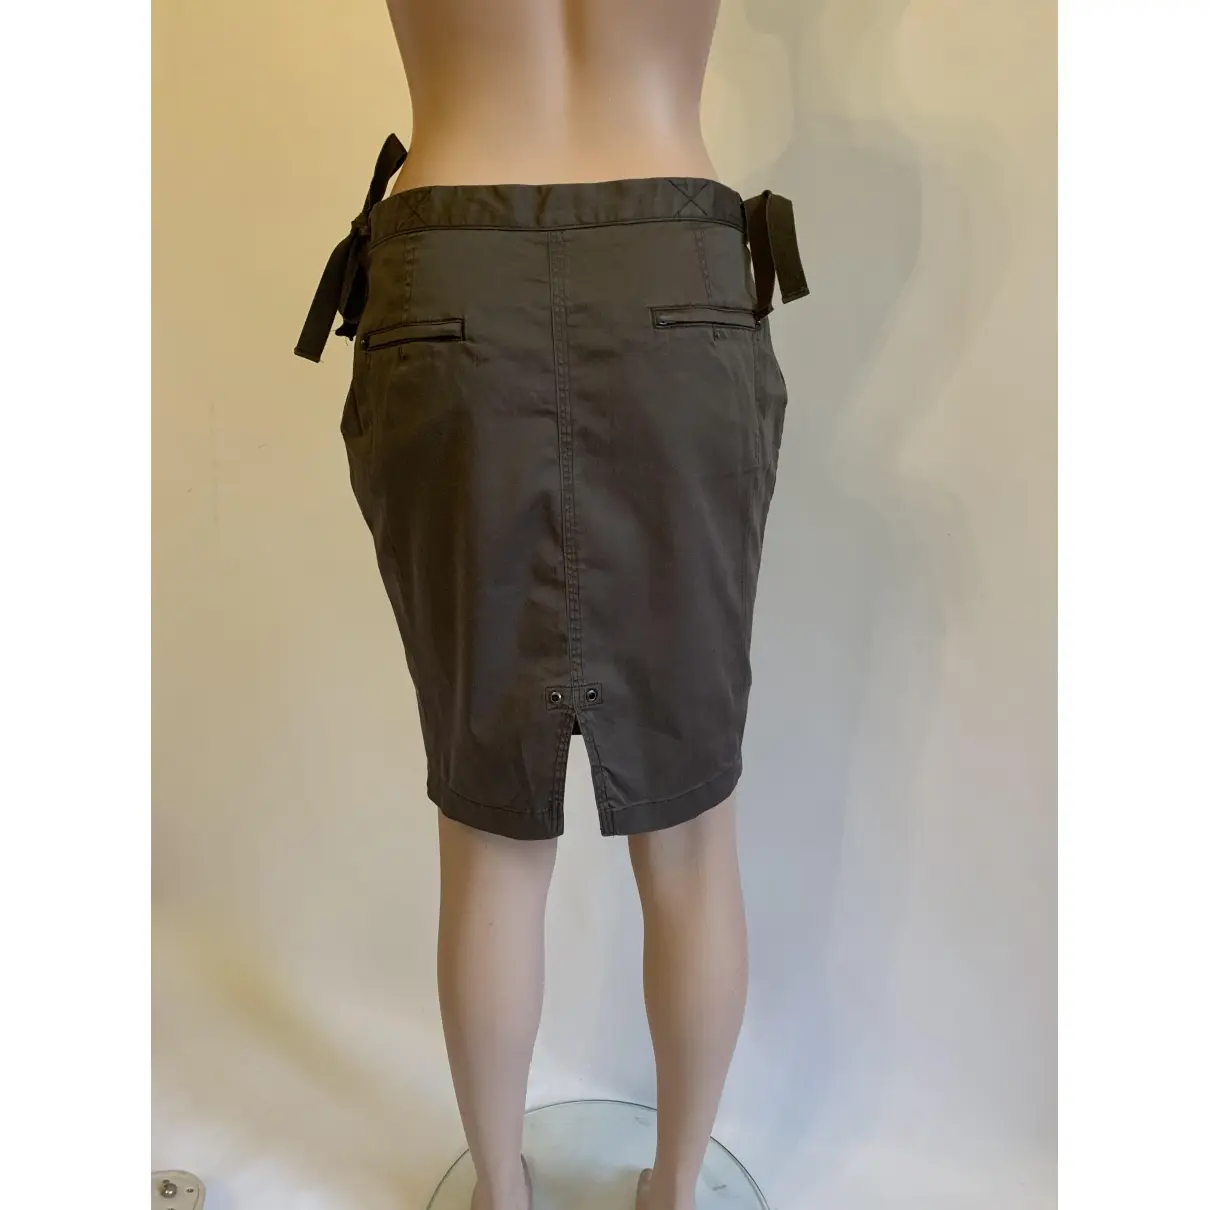 CNC Mini skirt for sale